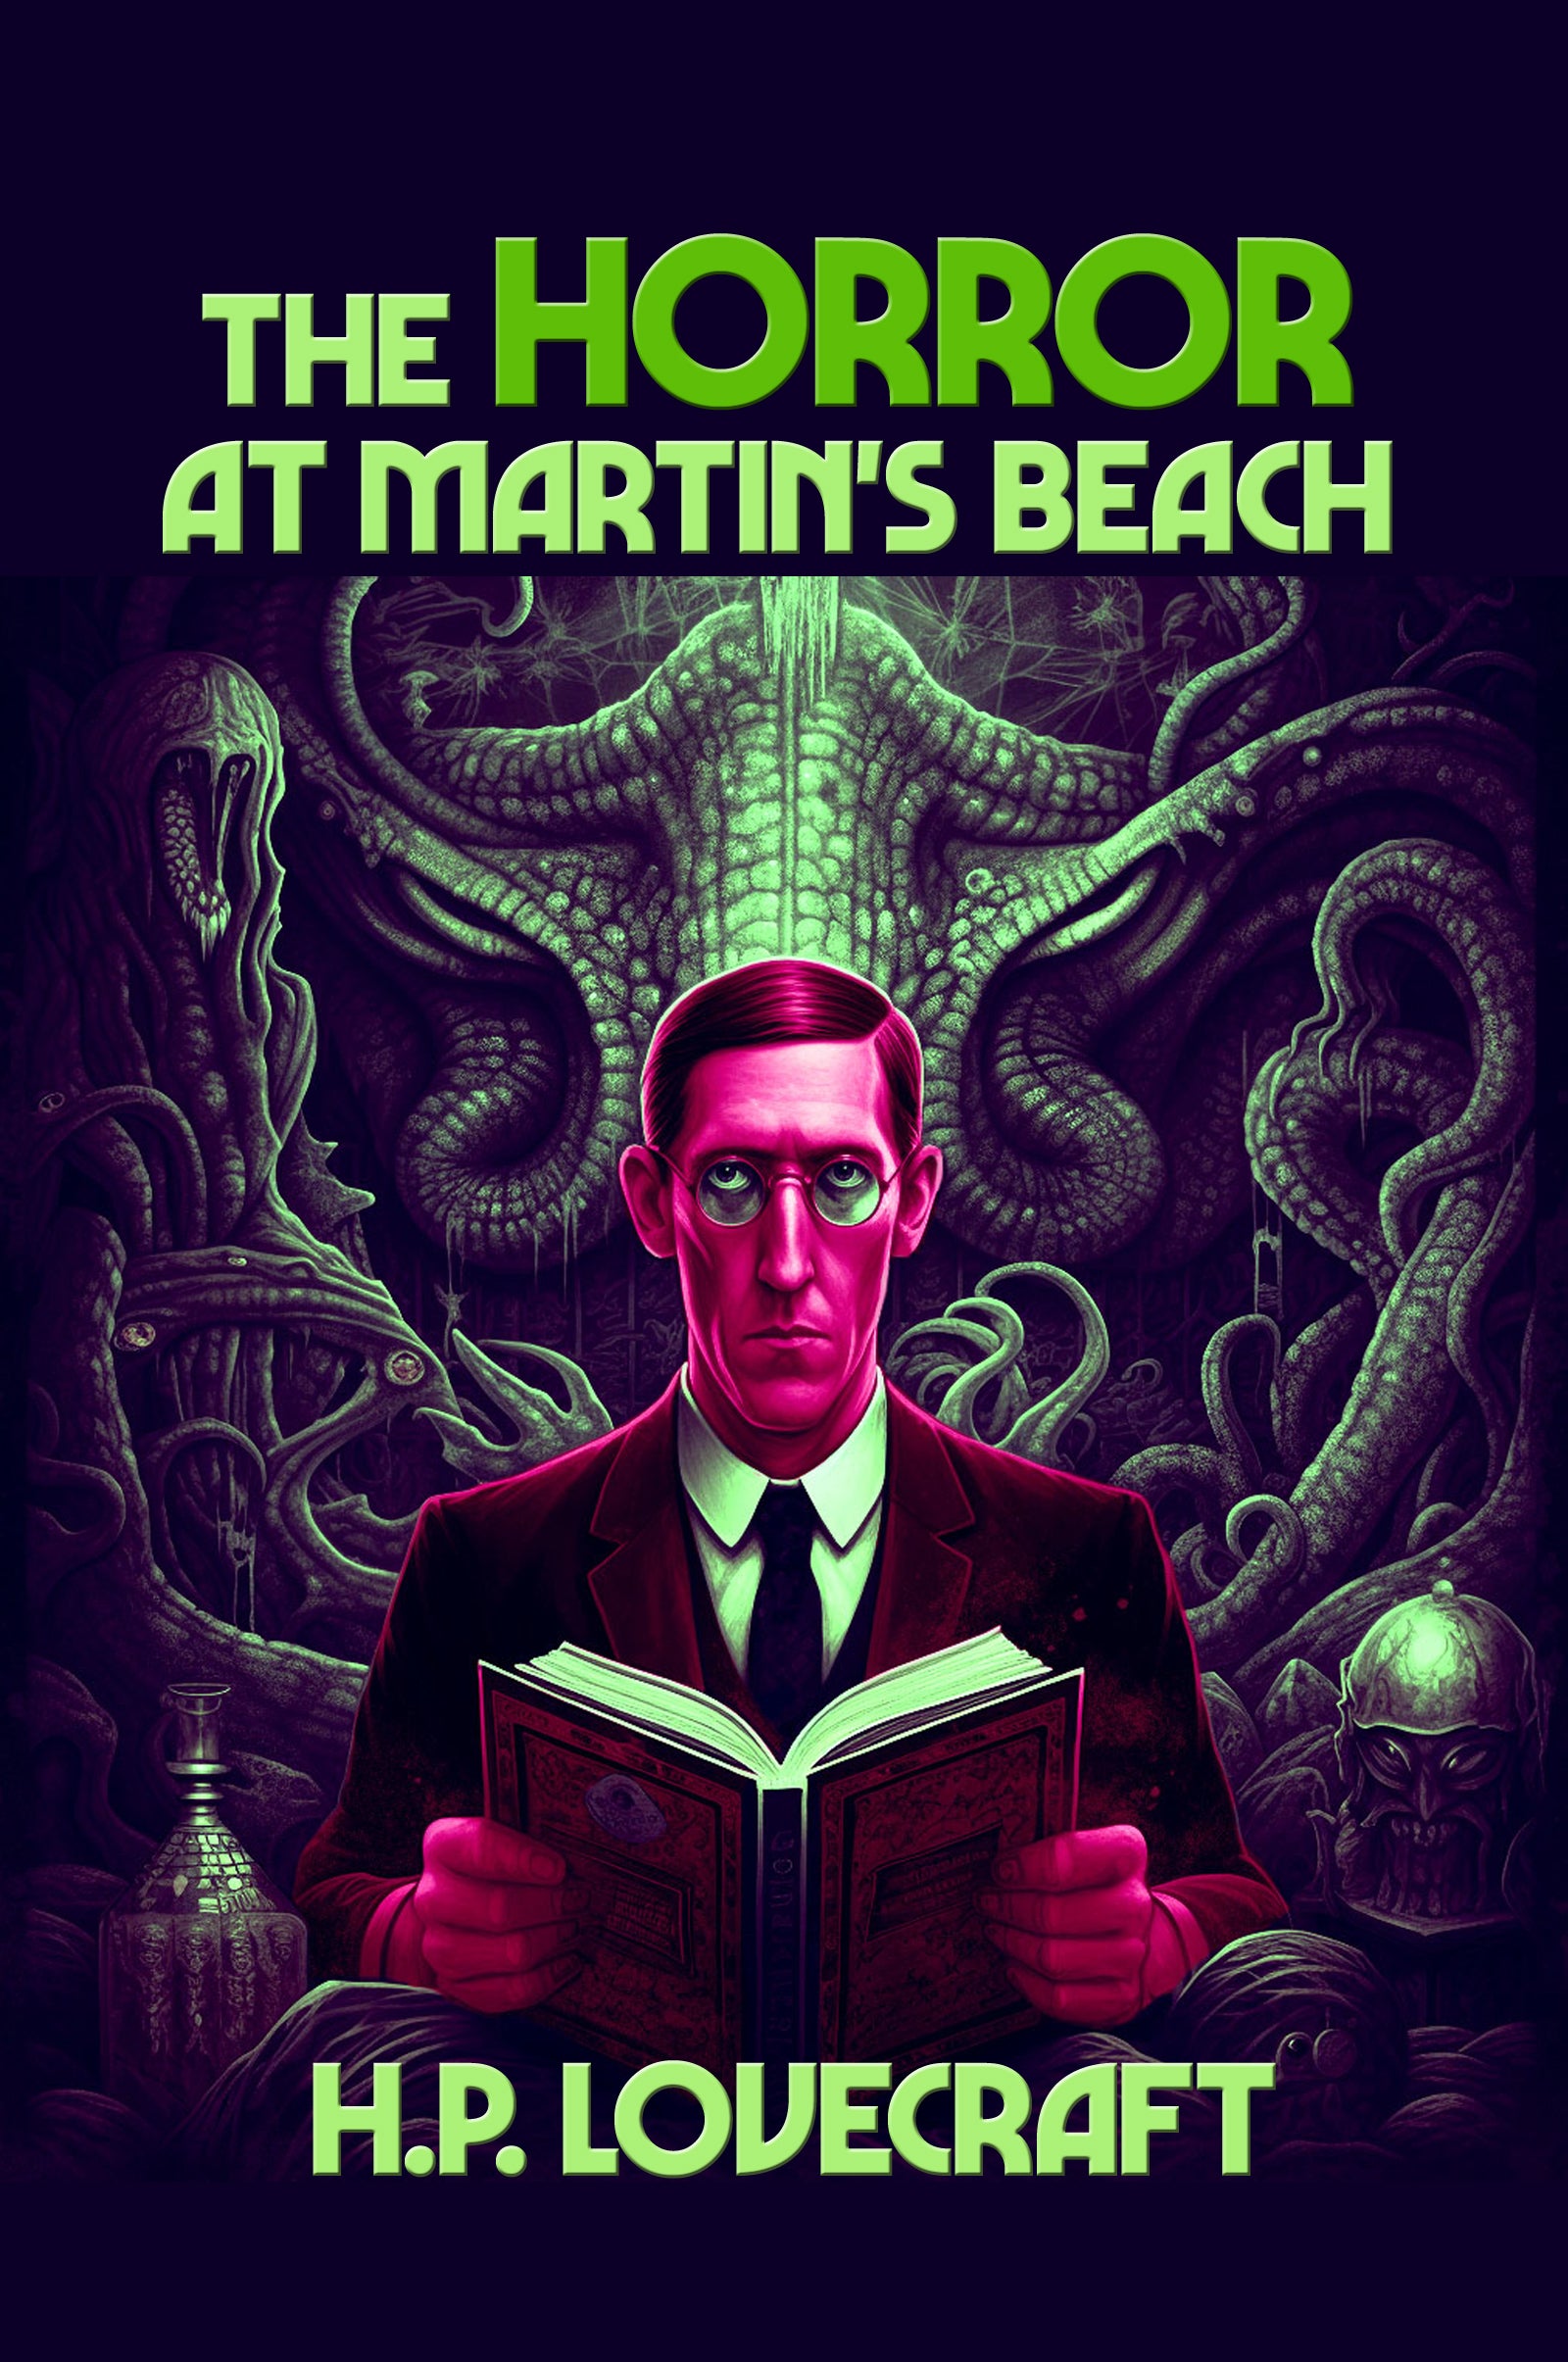 Cover art for PositronicPubs E-book: The Horror at Martin's Beach